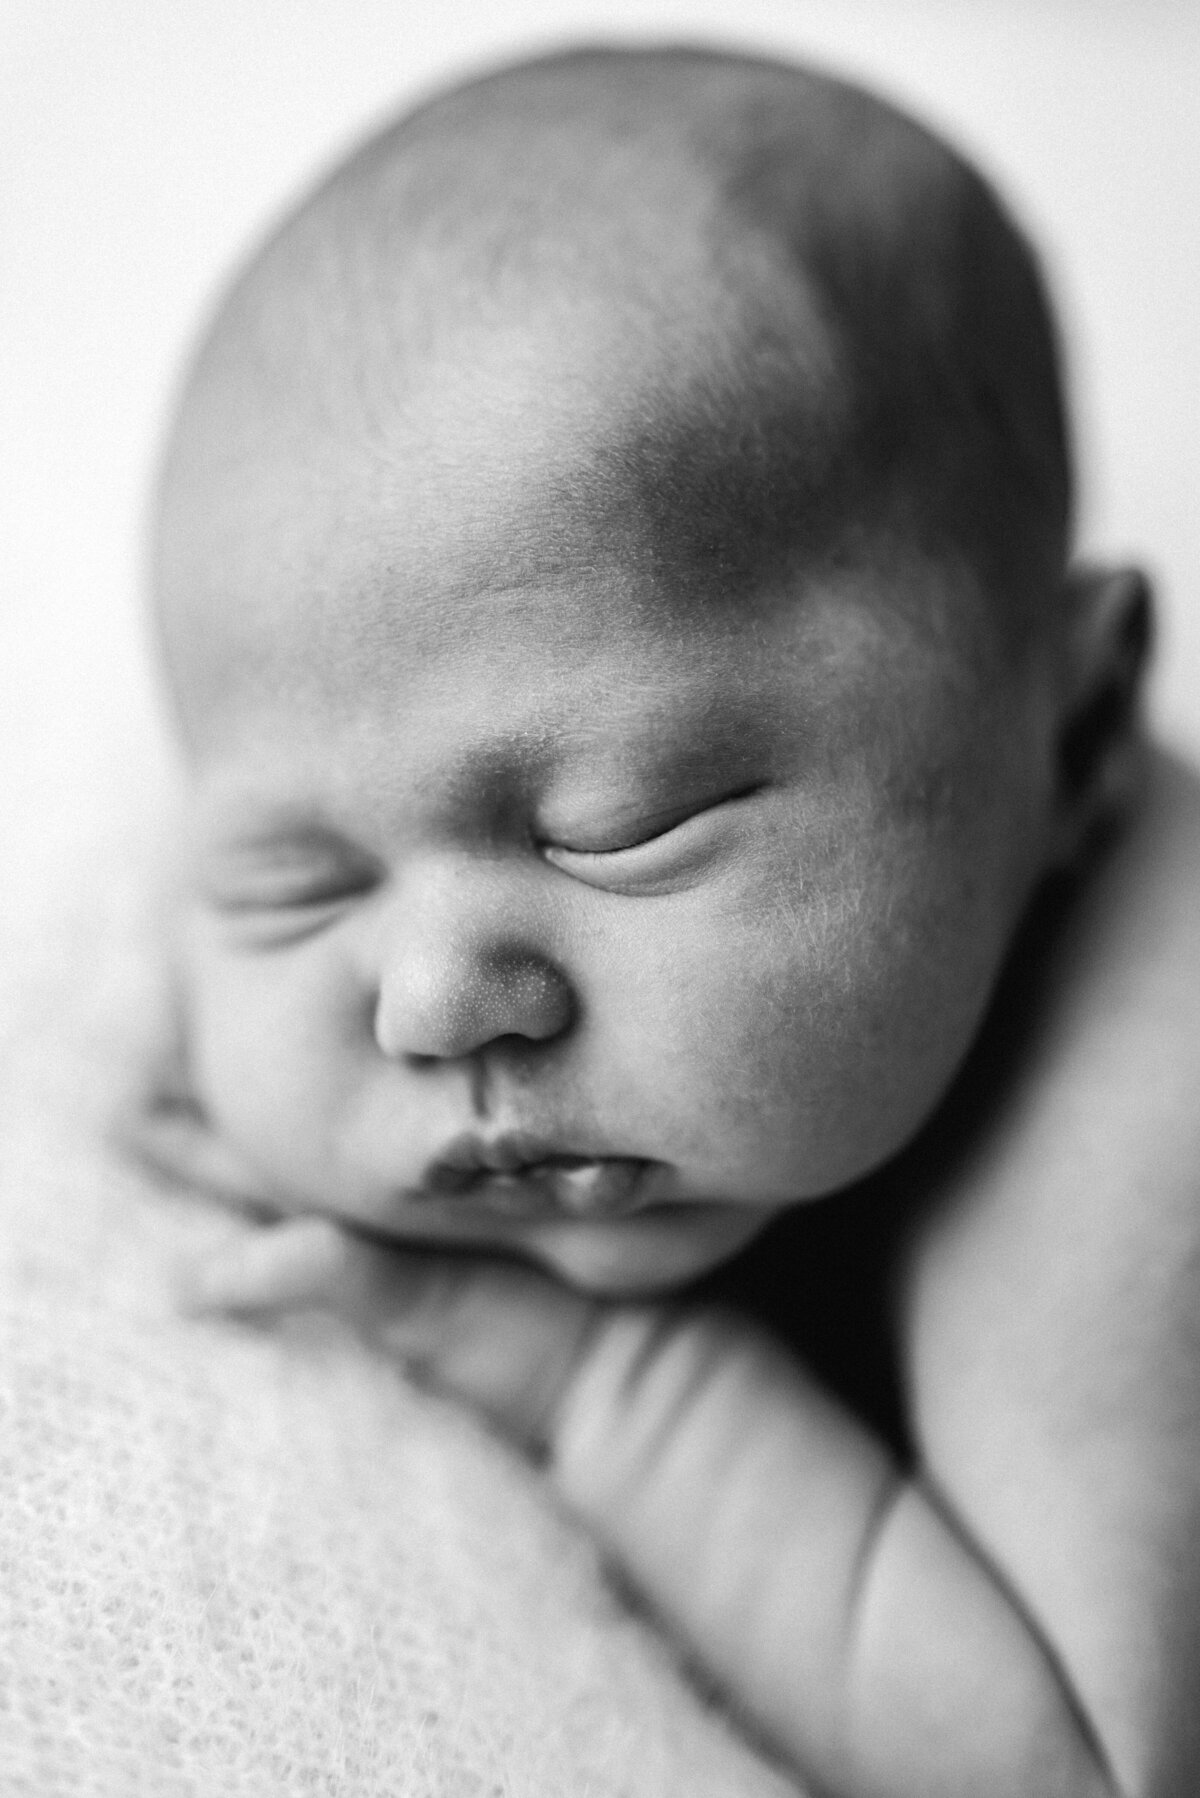 Newborn baby boy sleeping at newborn photoshoot in Billingshurst